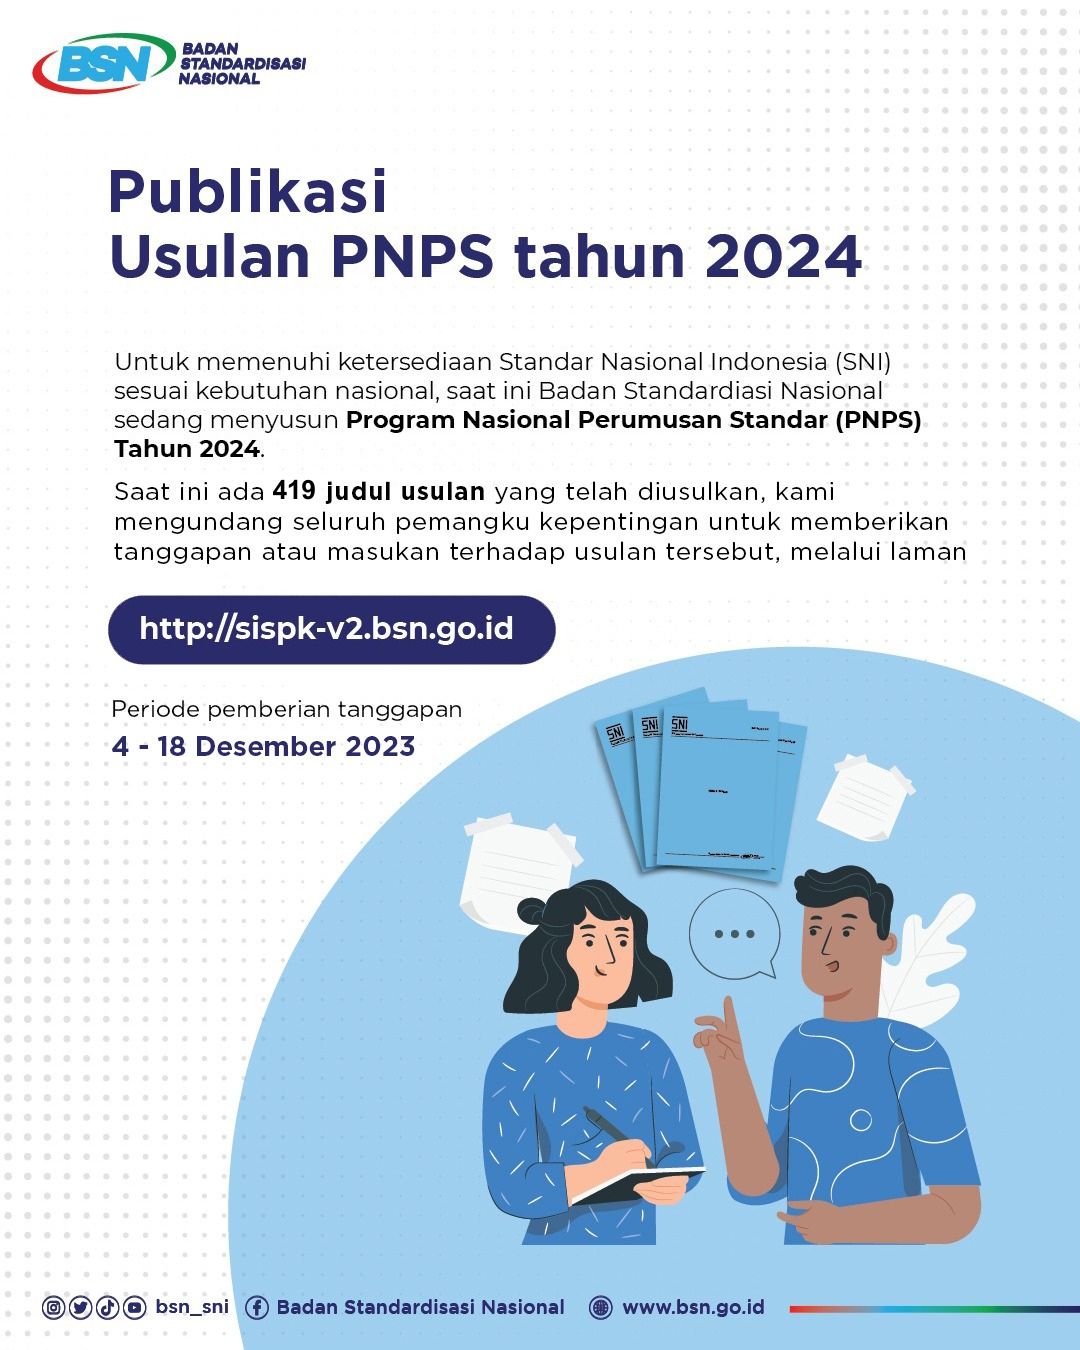 Publikasi Usulan PNPS Tahun 2024 BSN Badan Standardisasi Nasional